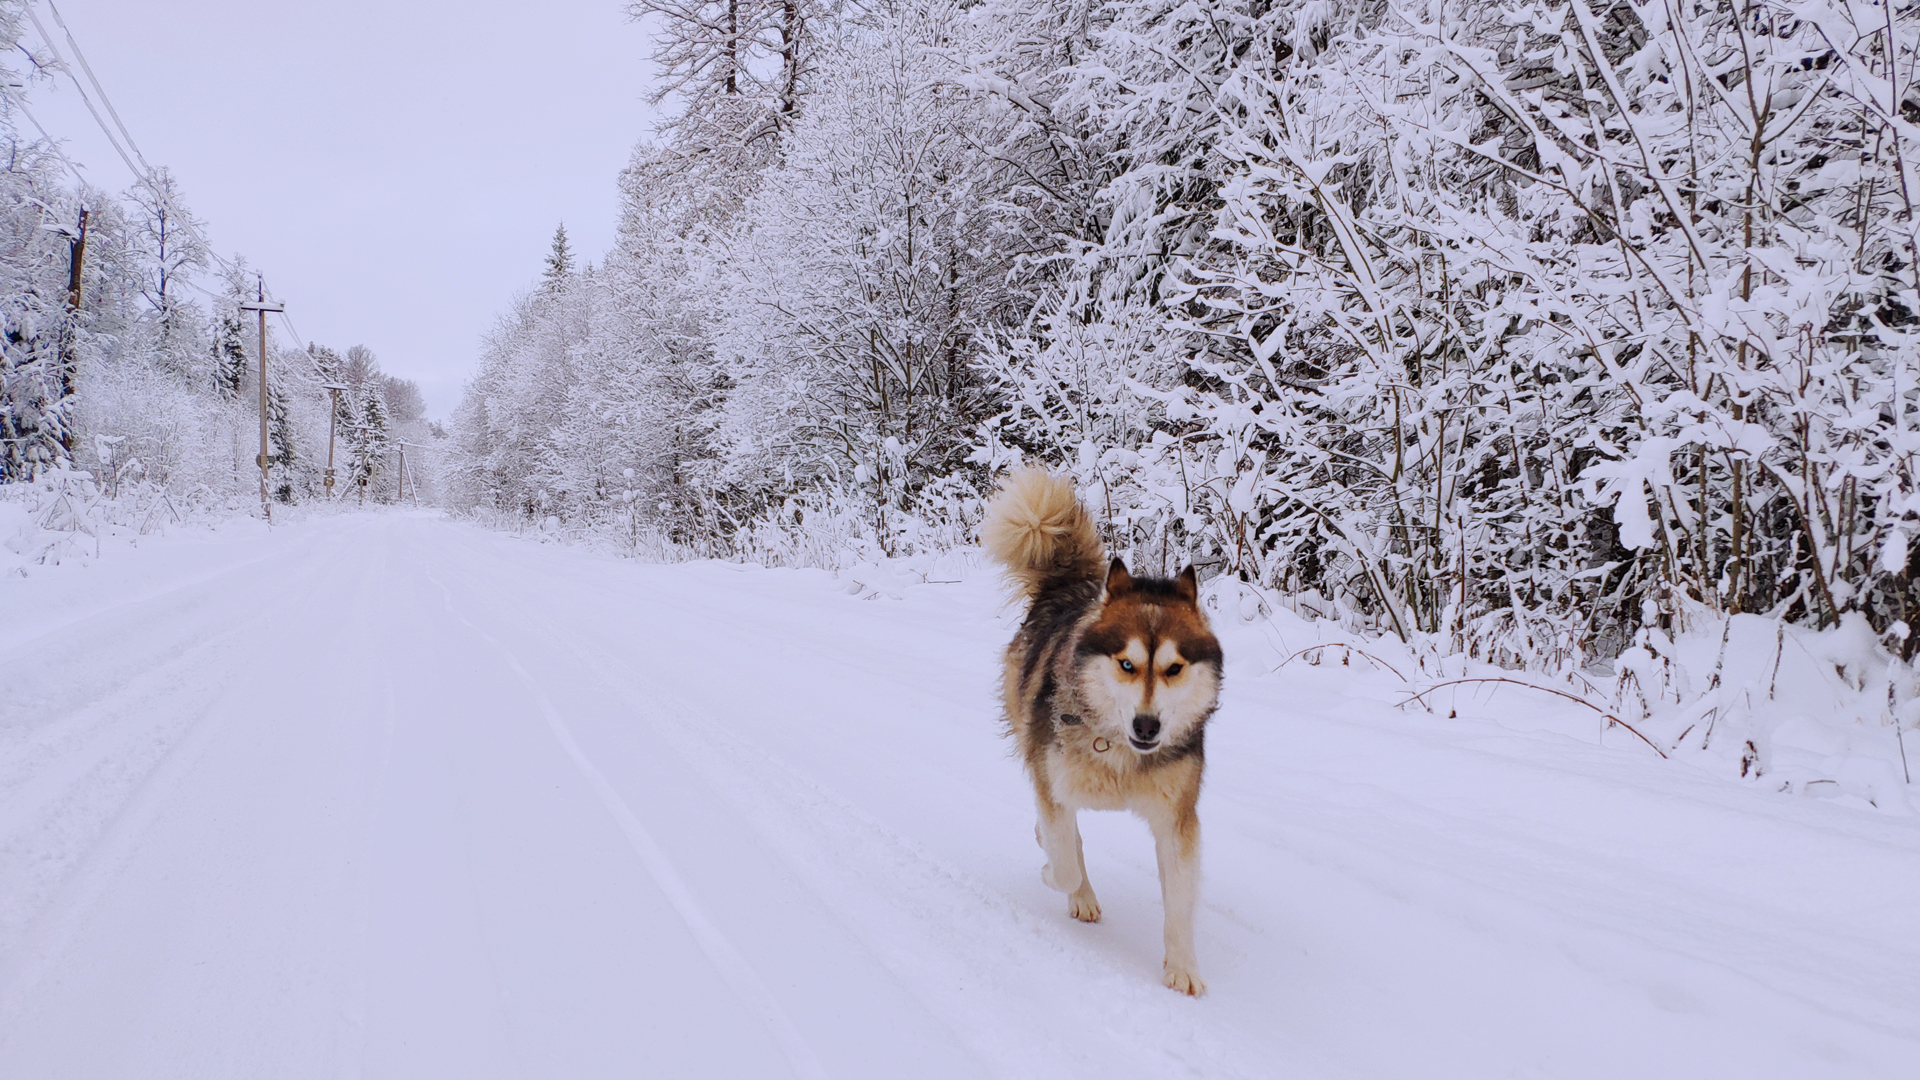 General 1920x1080 dog Siberian Husky  winter snow road trees forest animals heterochromia eyes nature white